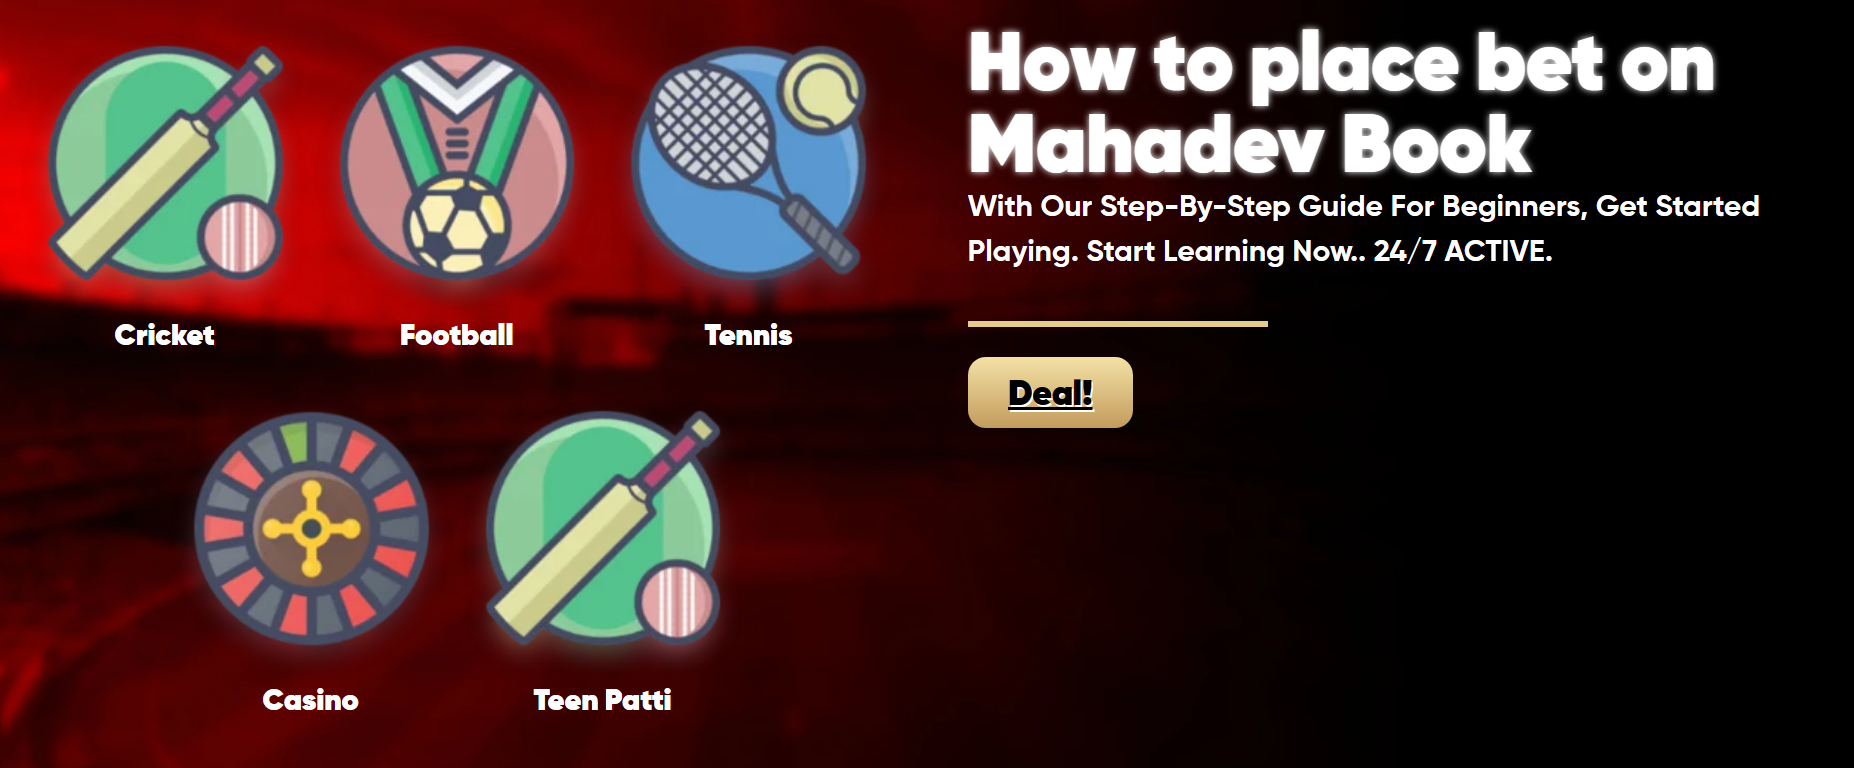 Mahadev Online Book Betting